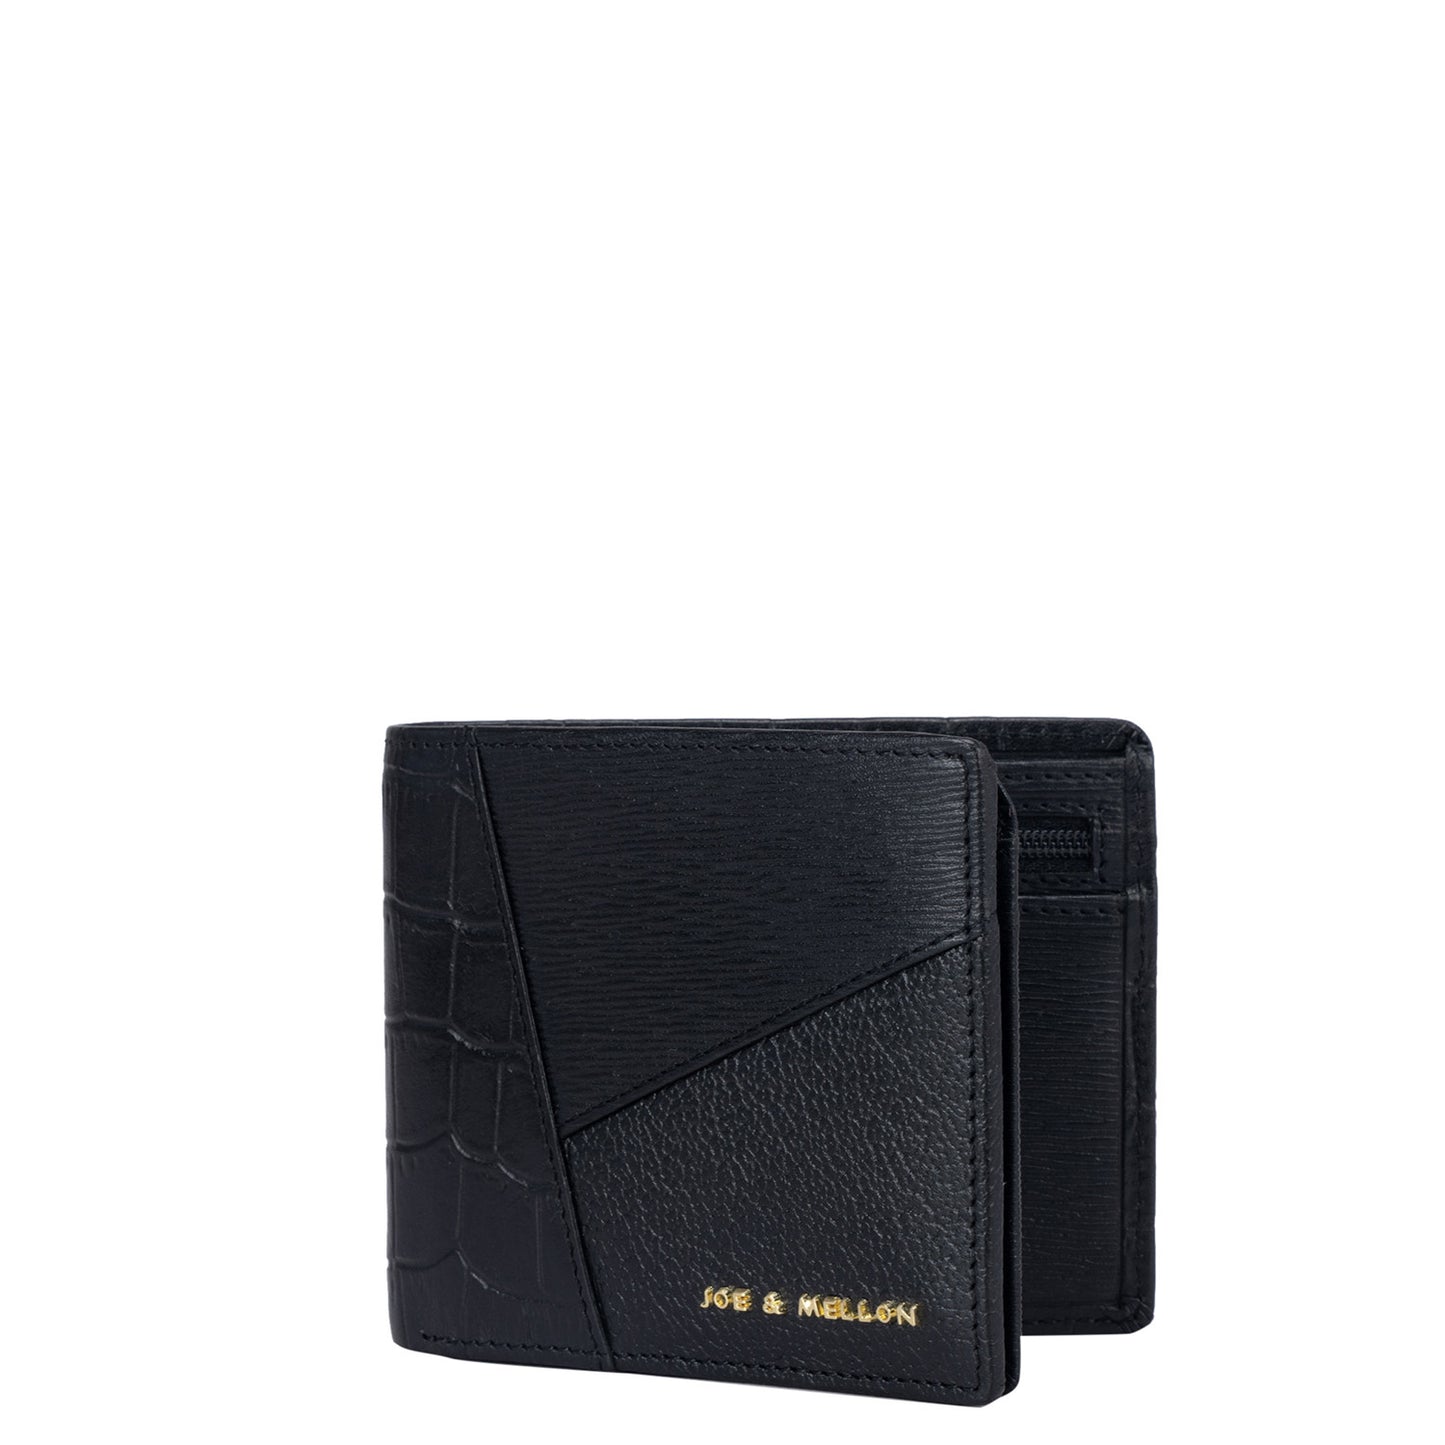 Carl Men's Wallet- Black